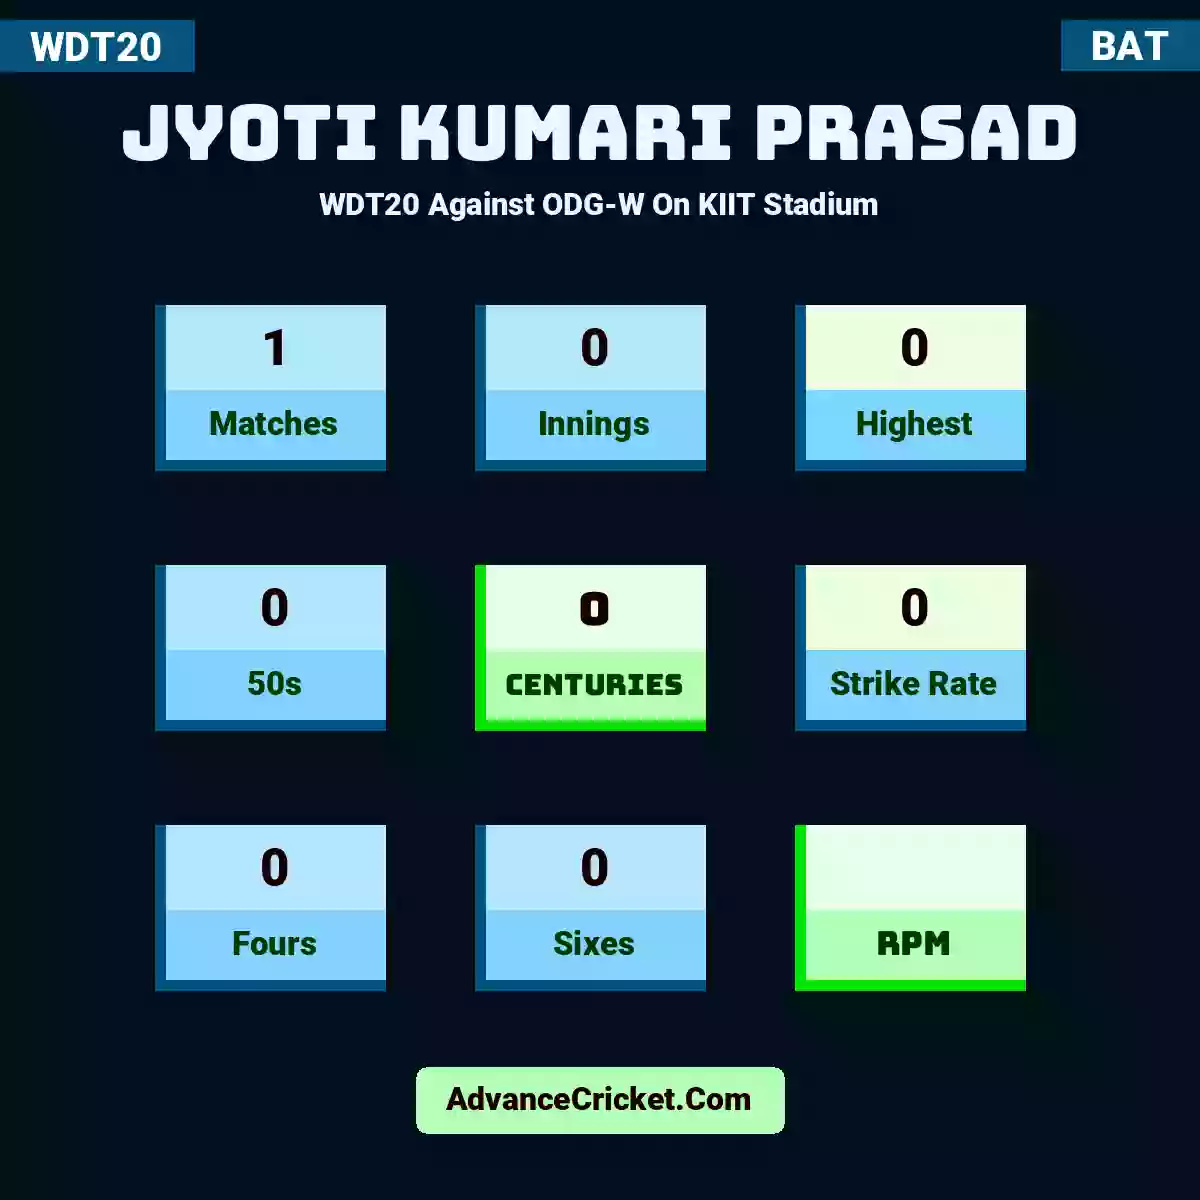 Jyoti Kumari Prasad WDT20  Against ODG-W On KIIT Stadium, Jyoti Kumari Prasad played 1 matches, scored 0 runs as highest, 0 half-centuries, and 0 centuries, with a strike rate of 0. J.Kumari Prasad hit 0 fours and 0 sixes.